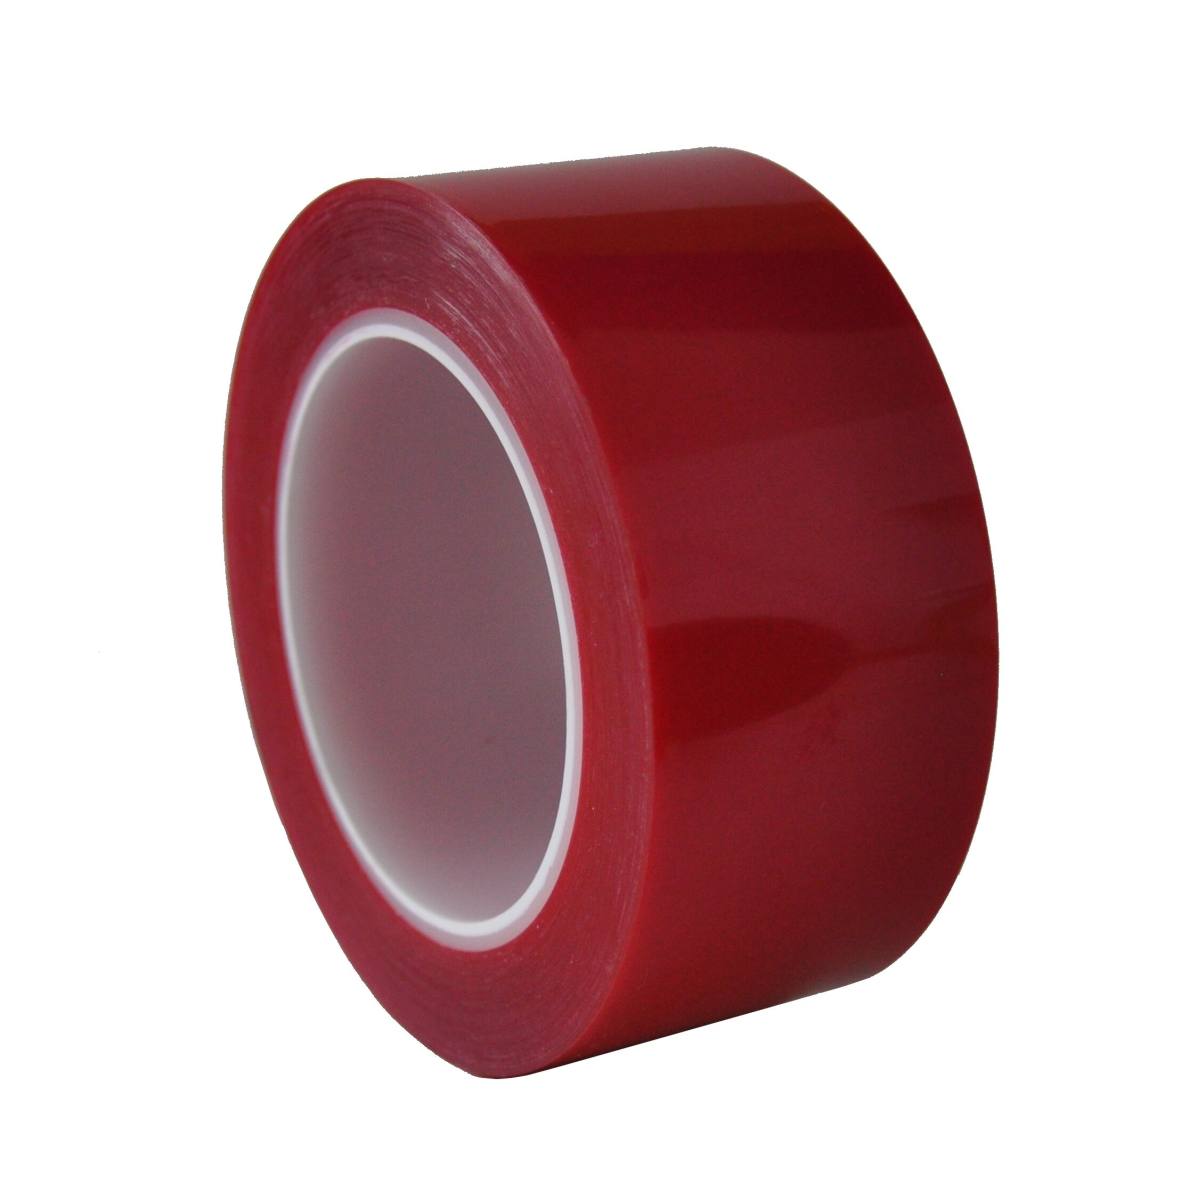 S-K-S 208R ruban adhésif en polyester, 50mmx66m, rouge